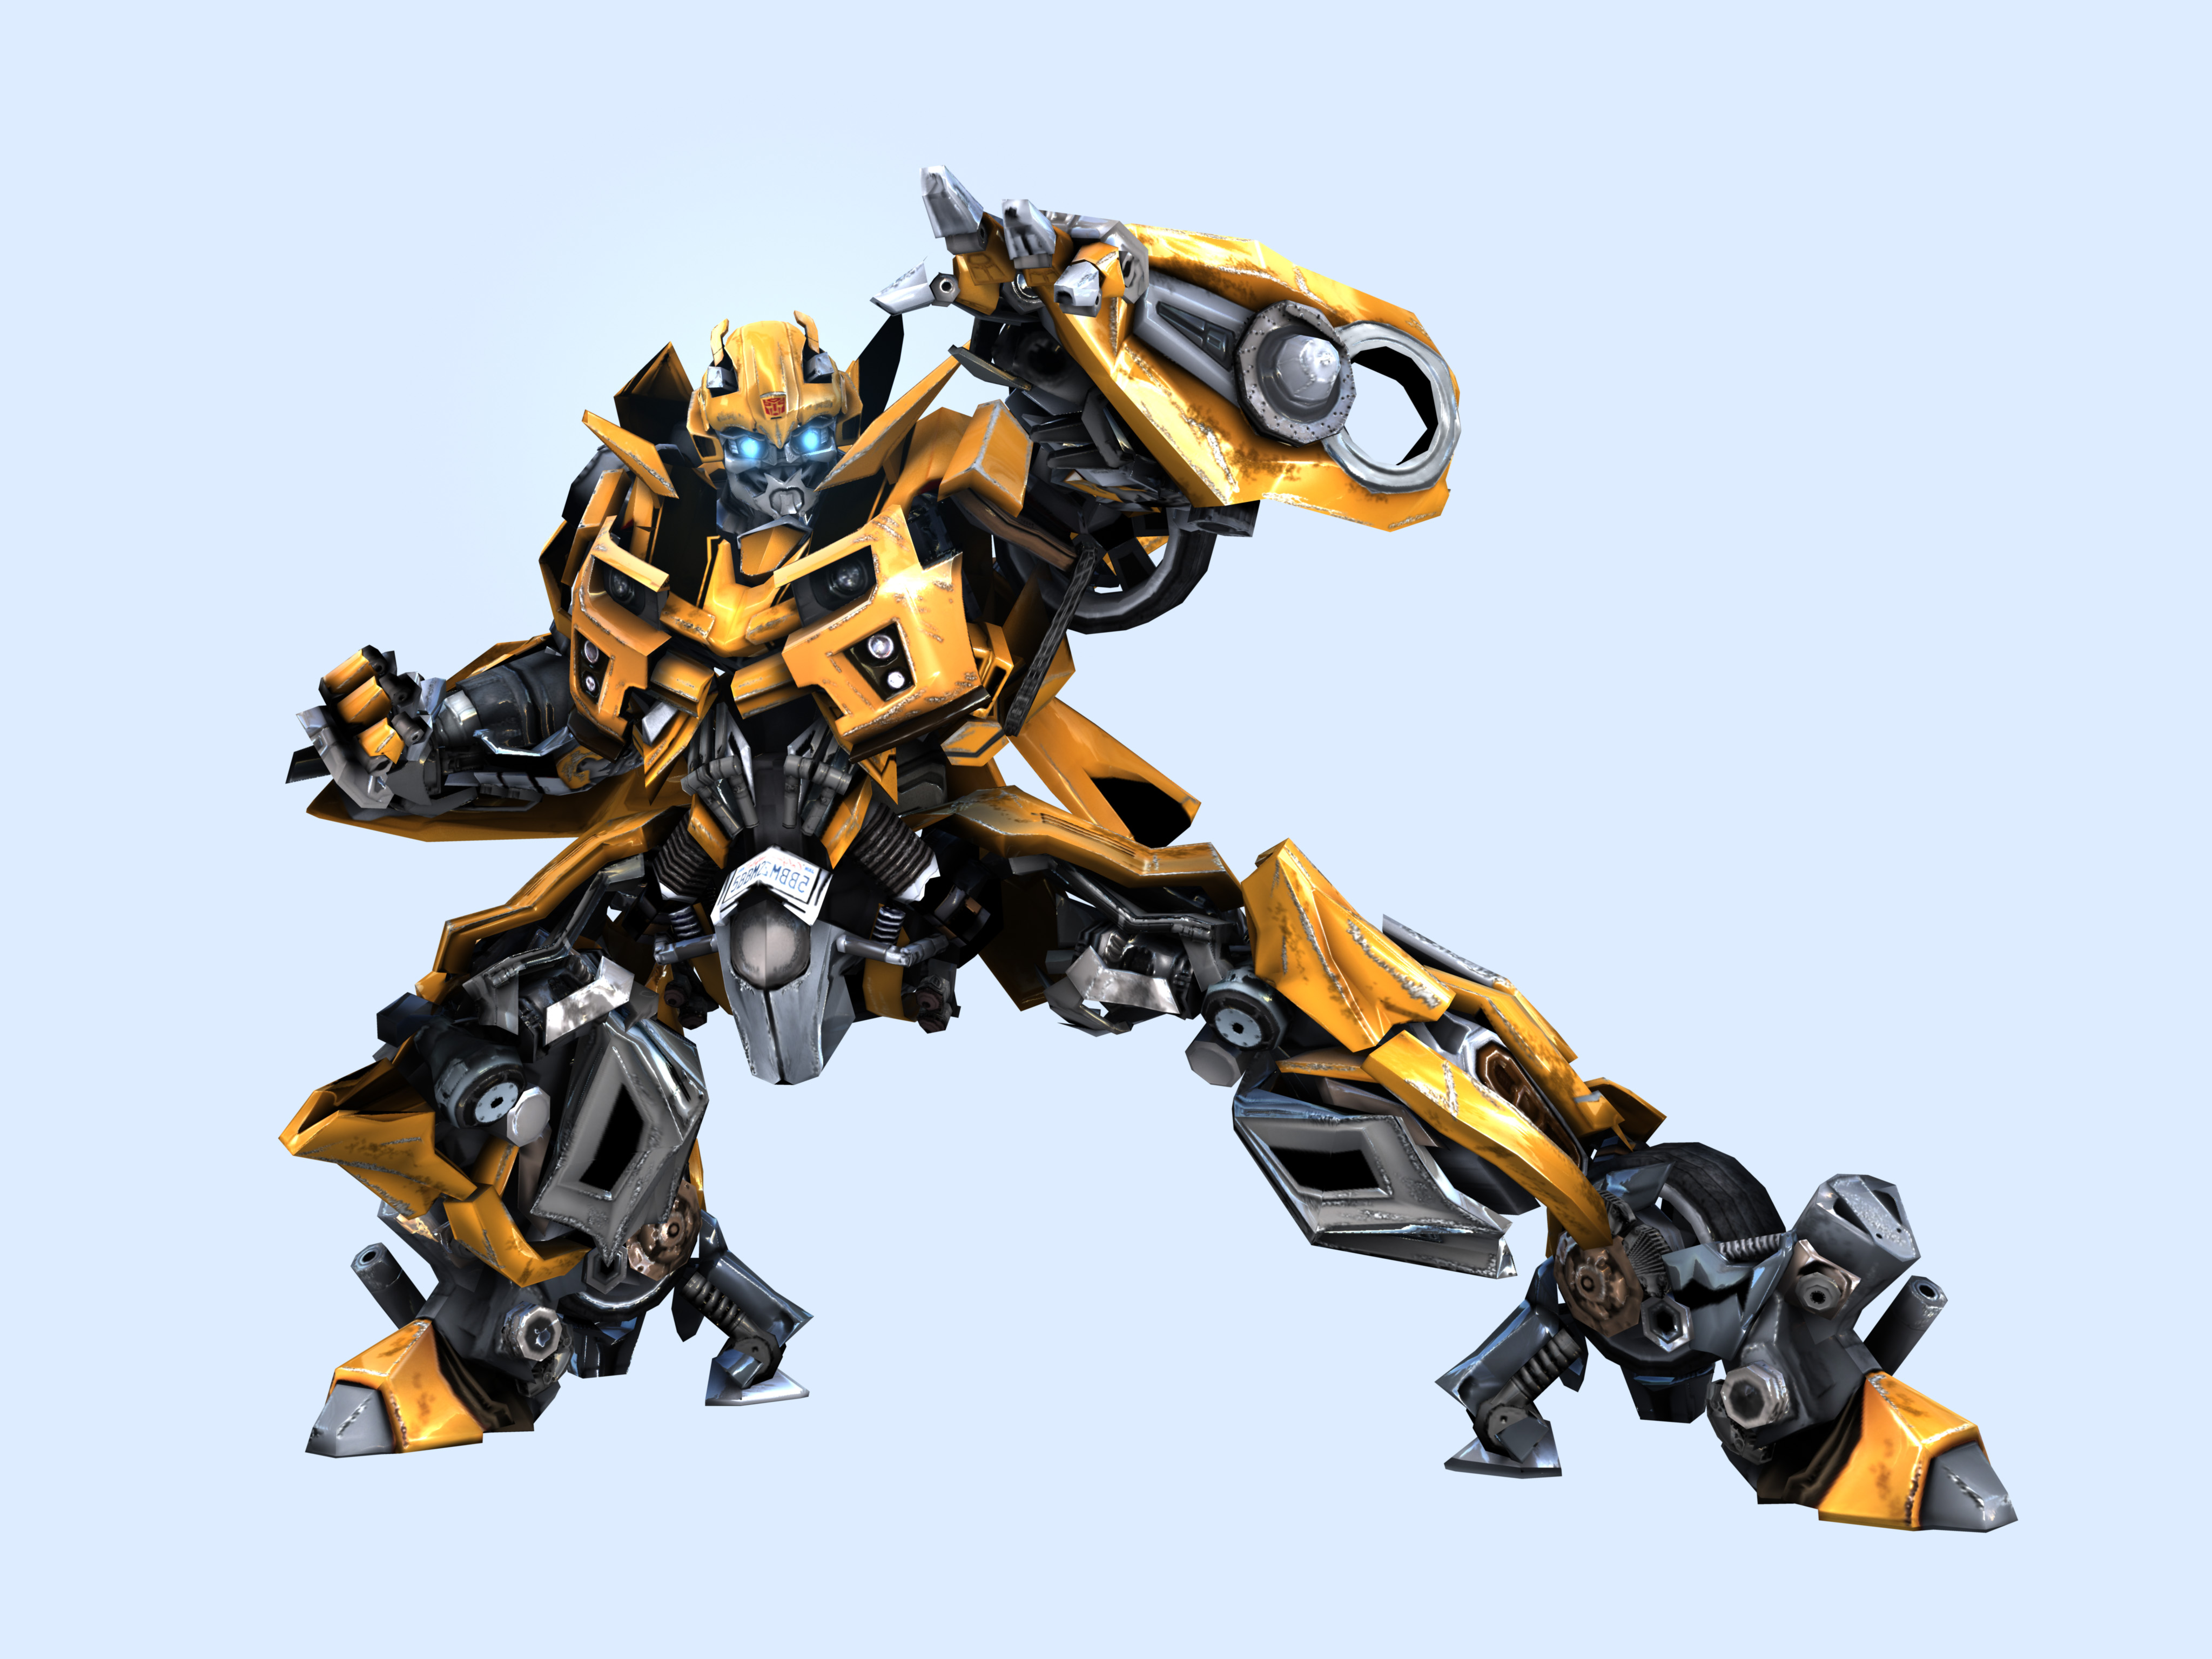 Transformers Bumblebee - 4095x3072 Wallpaper 